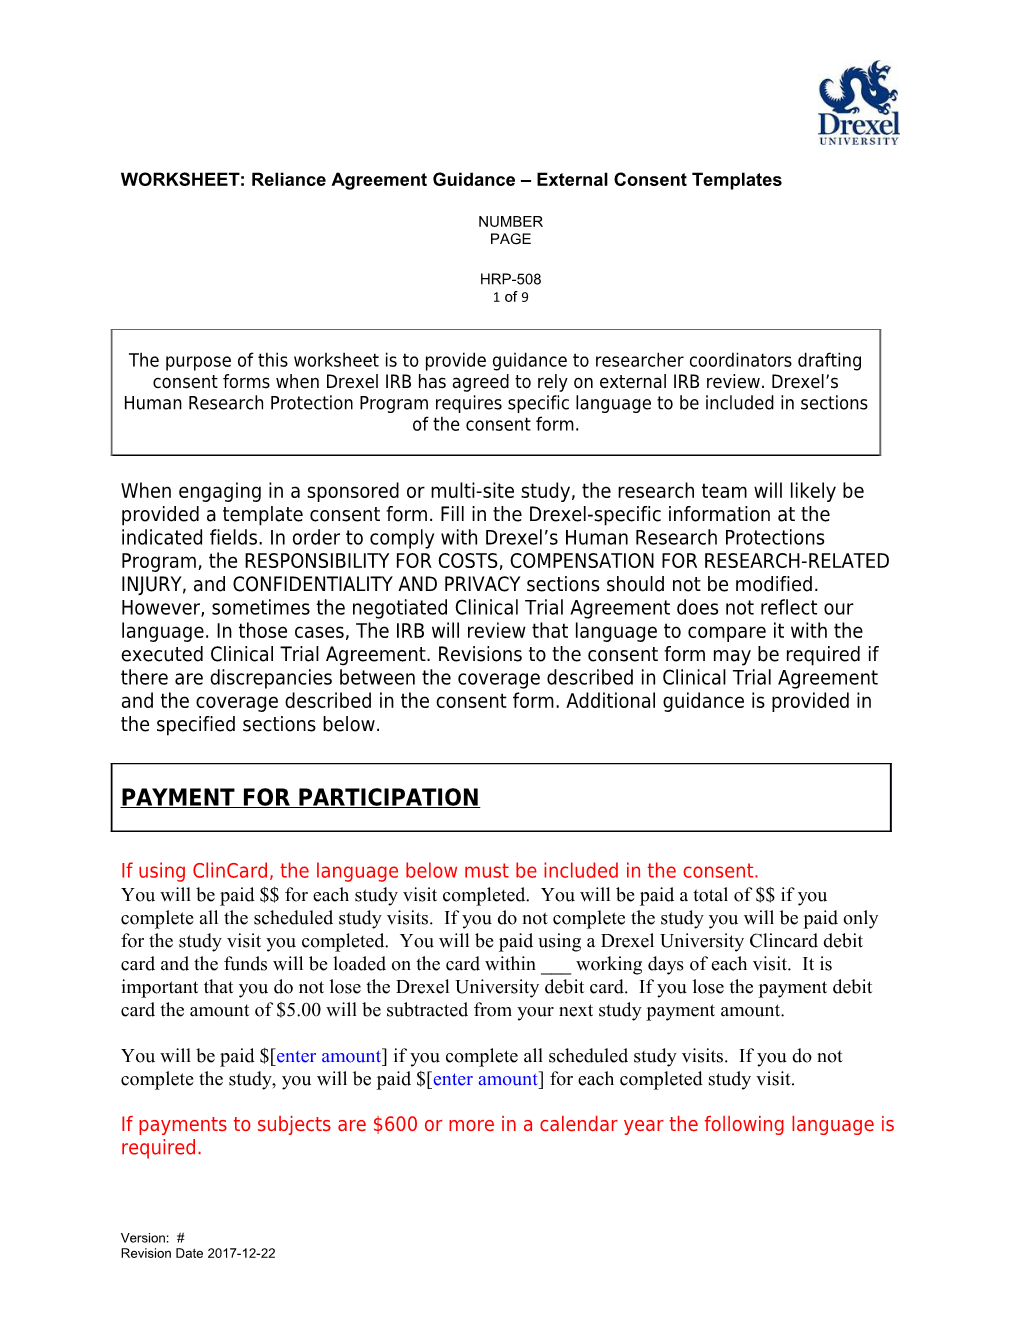 HRP-508 External IRB Consent Language Requirements